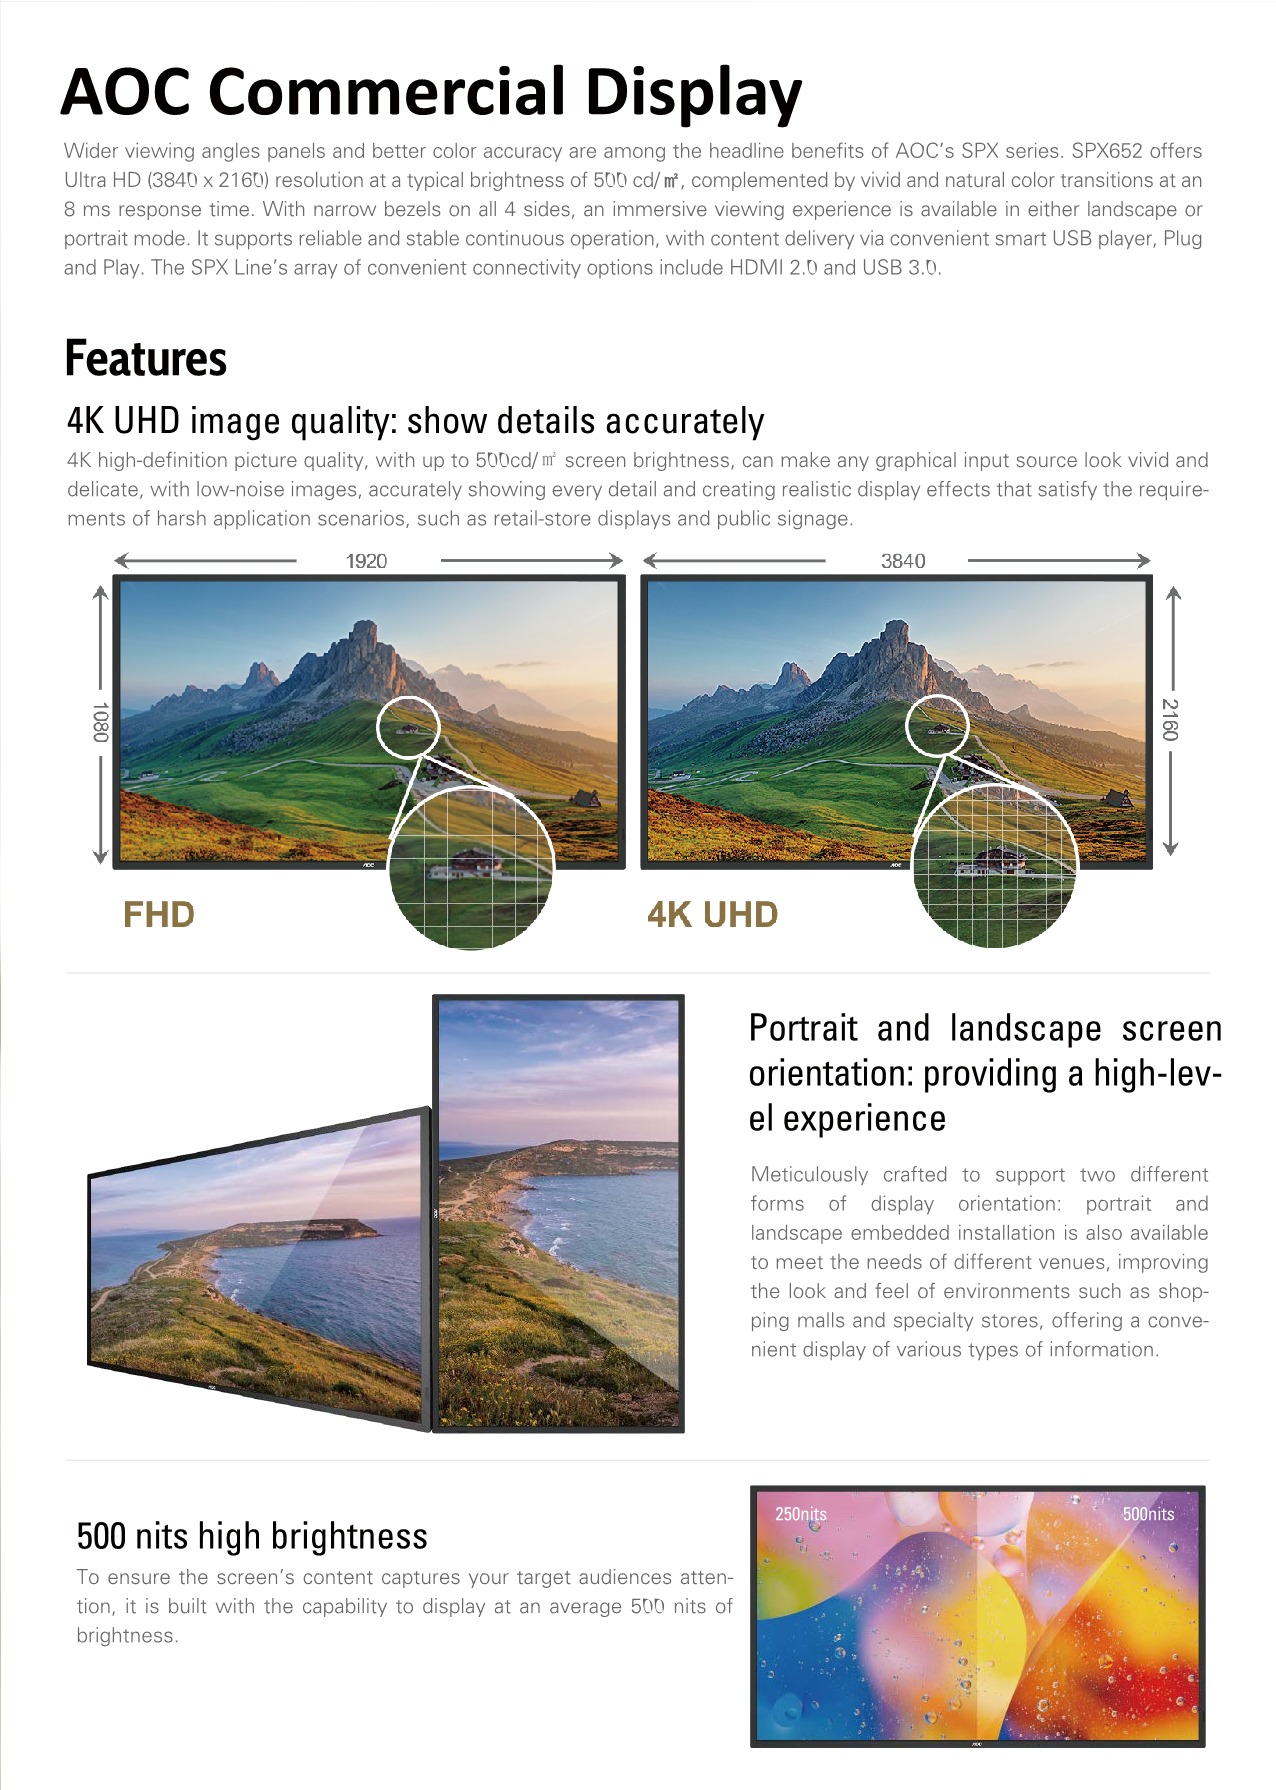 AOC Performace Display SPX652 SP Series